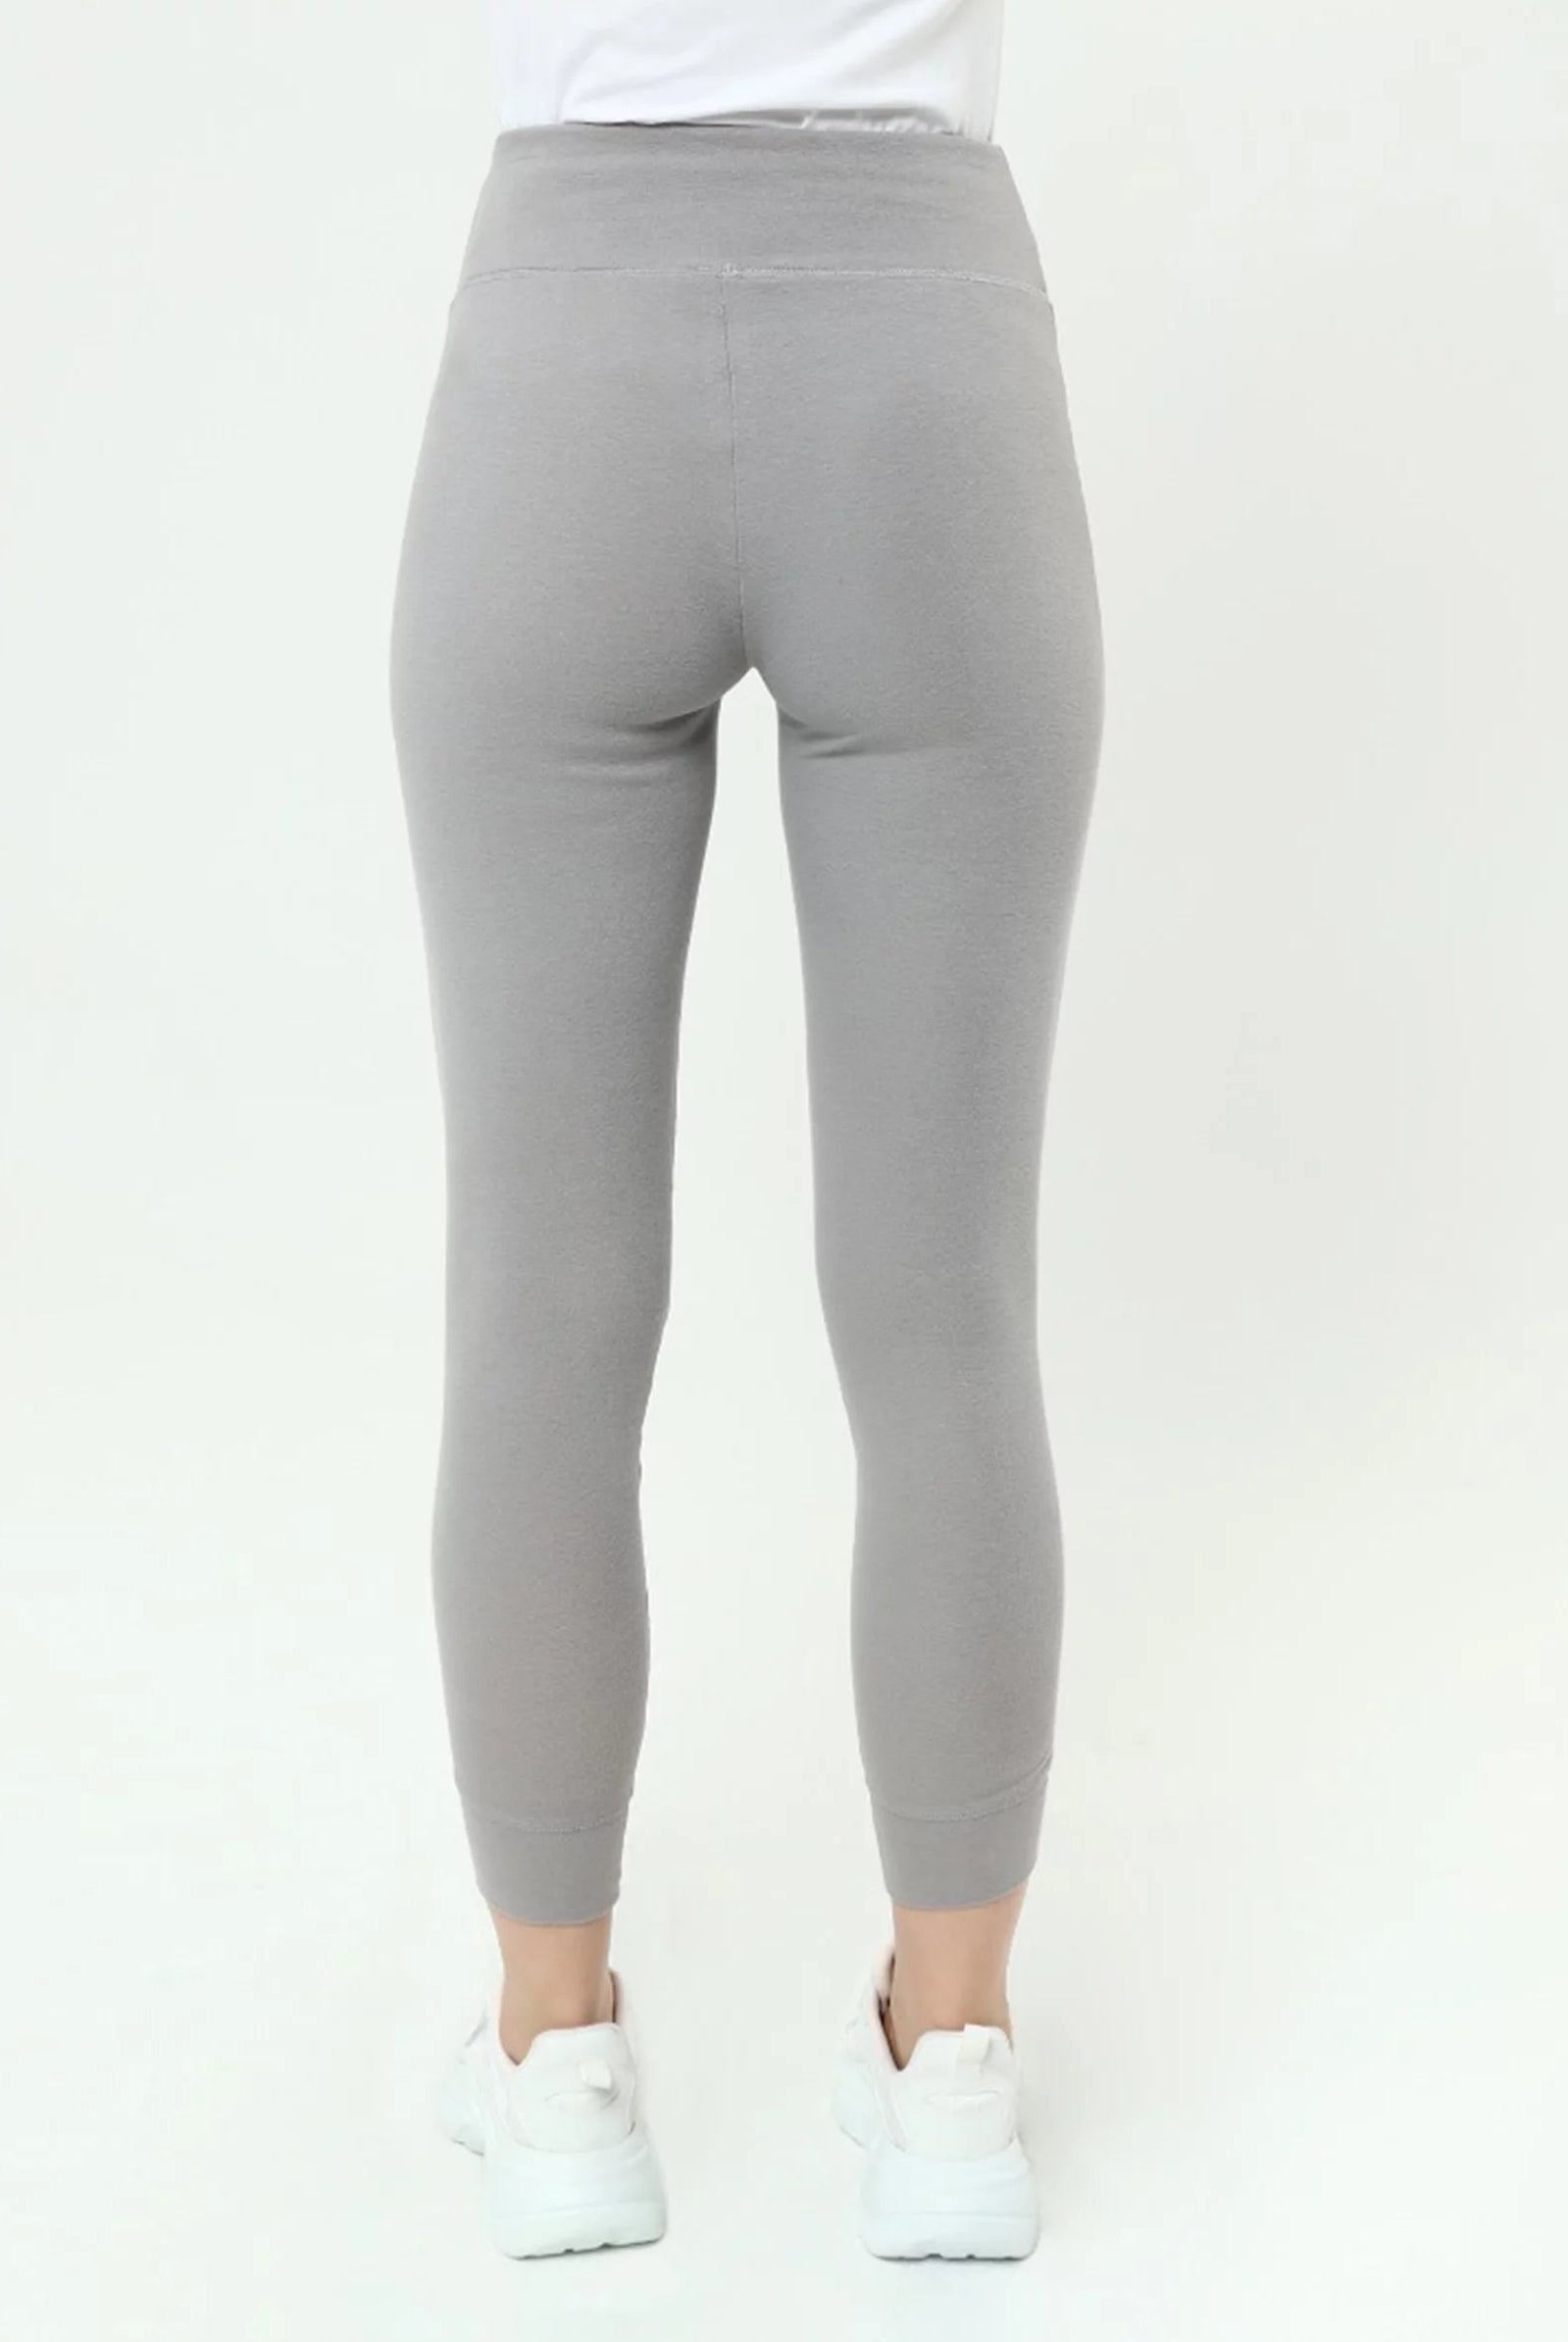 shop for women's grey leggings